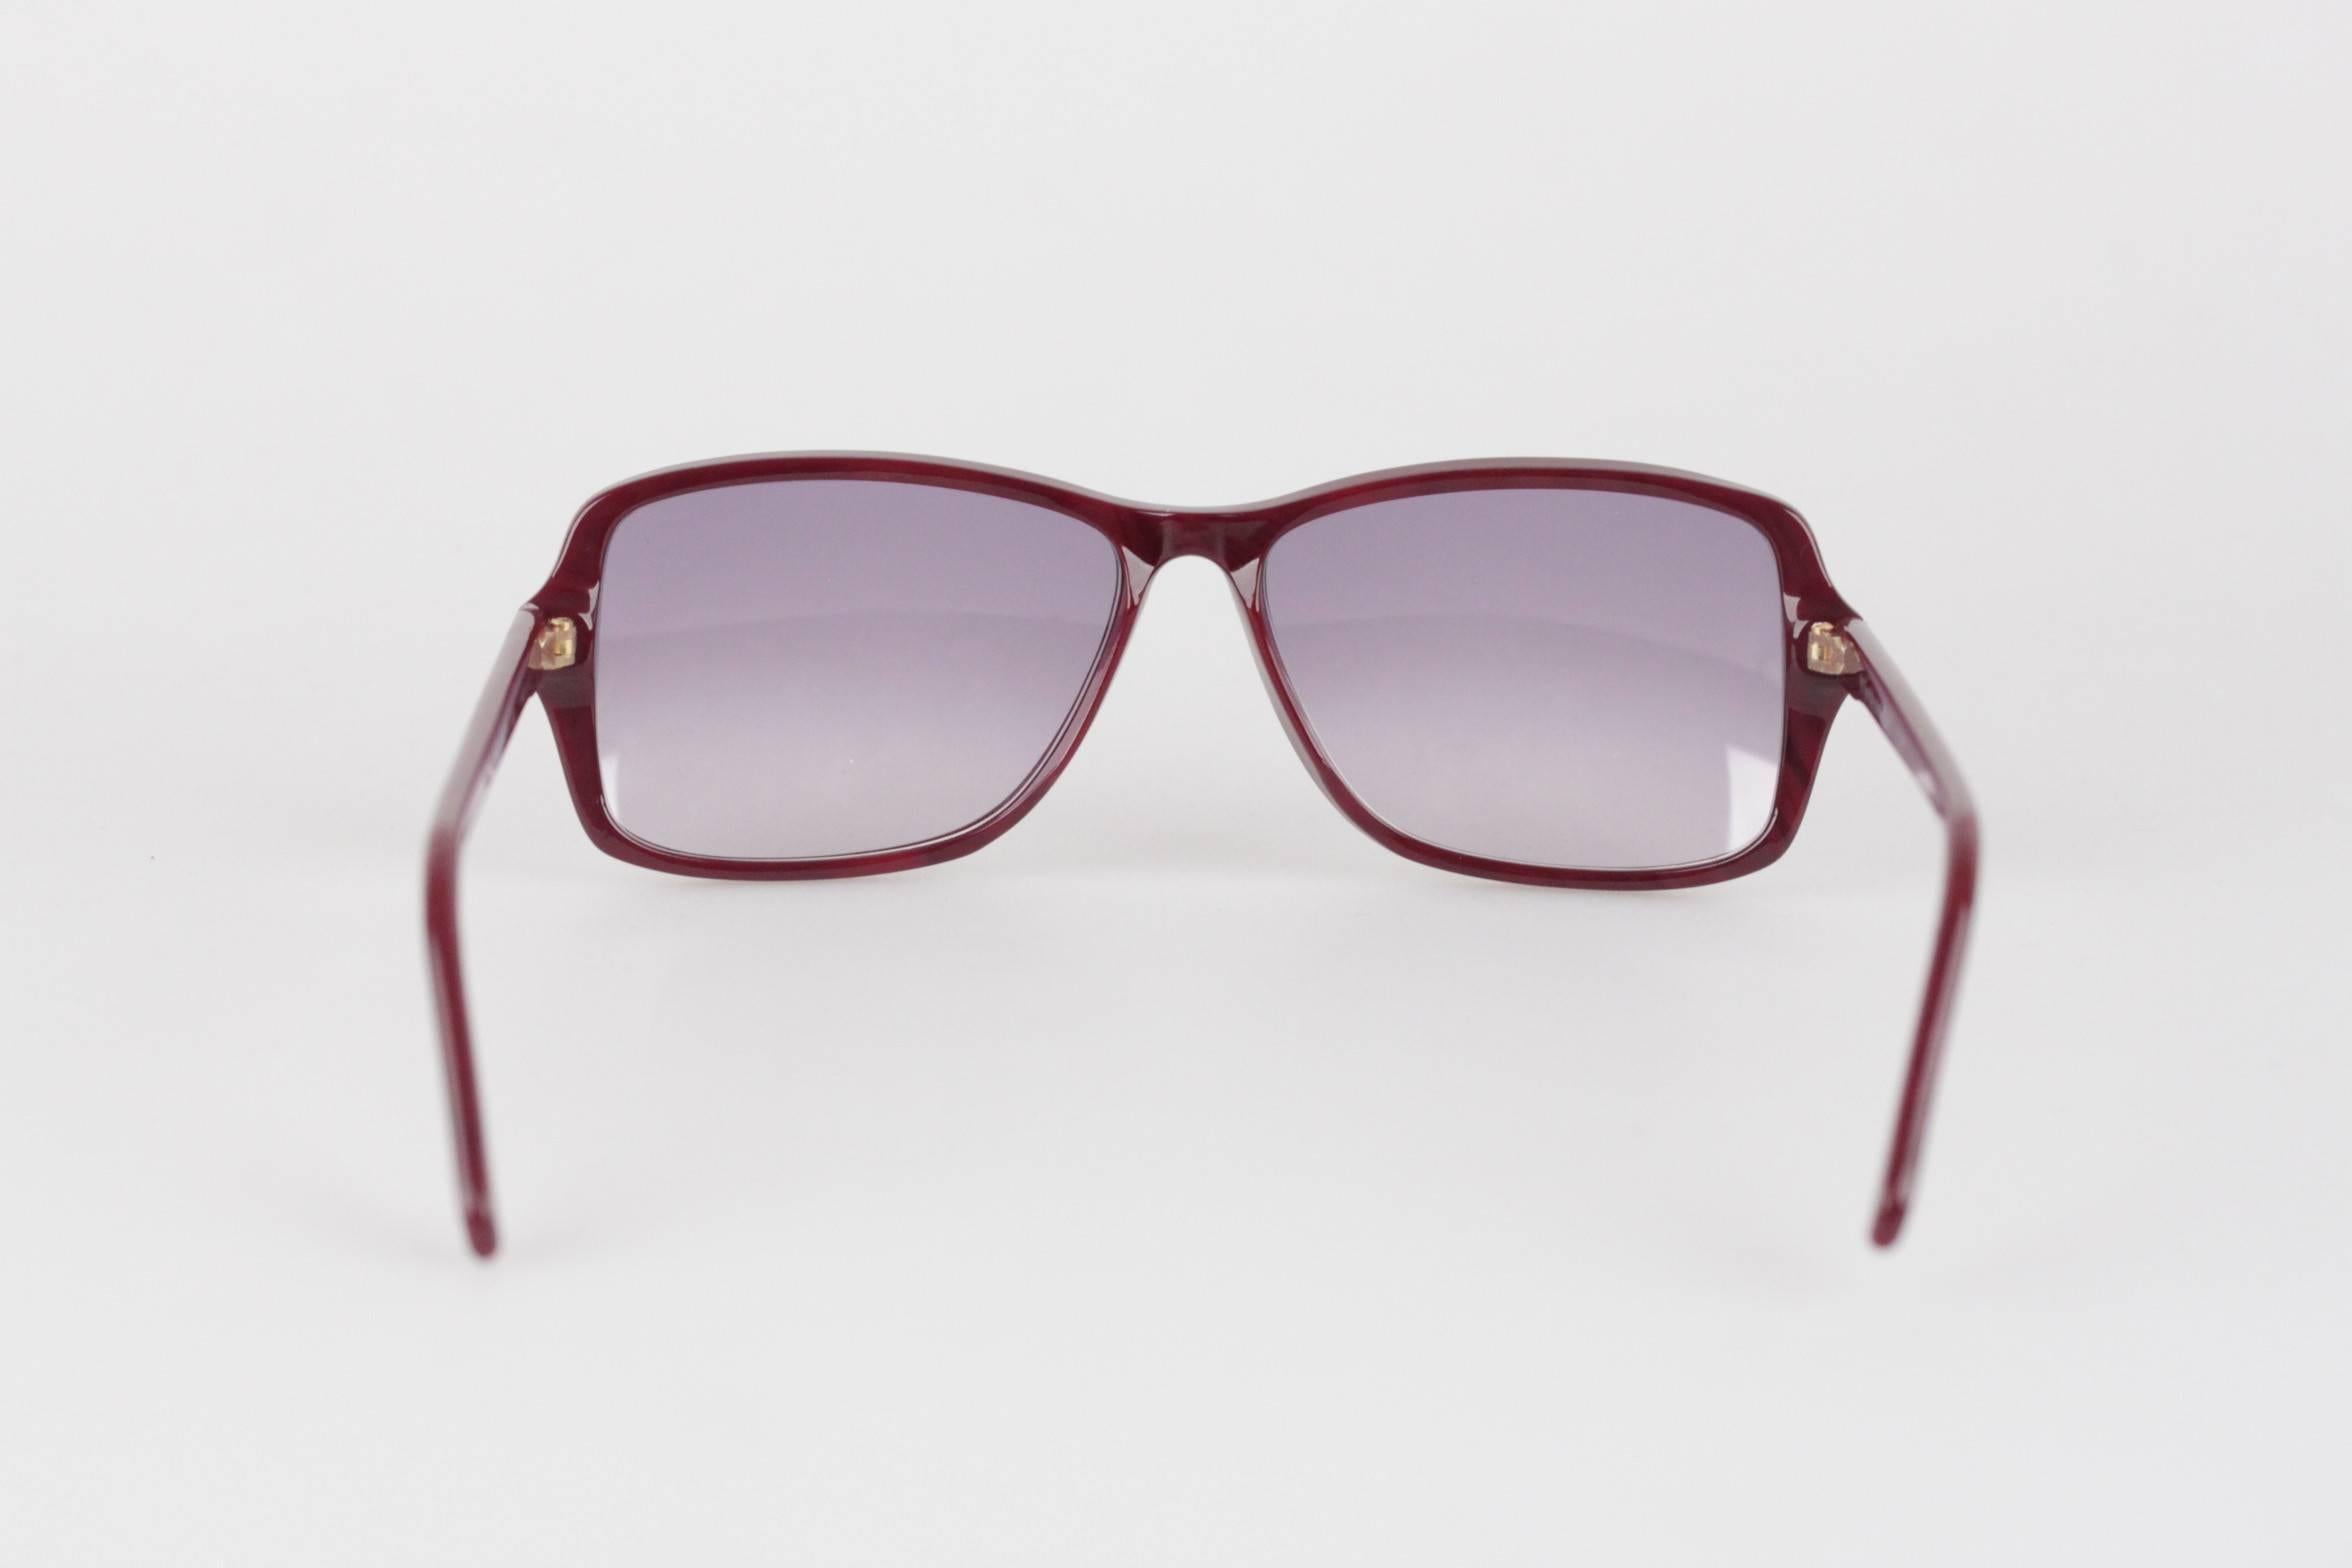 YVES SAINT LAURENT Rare MINT Burgundy Unisex Sunglasses mod. ICARE 59mm 2